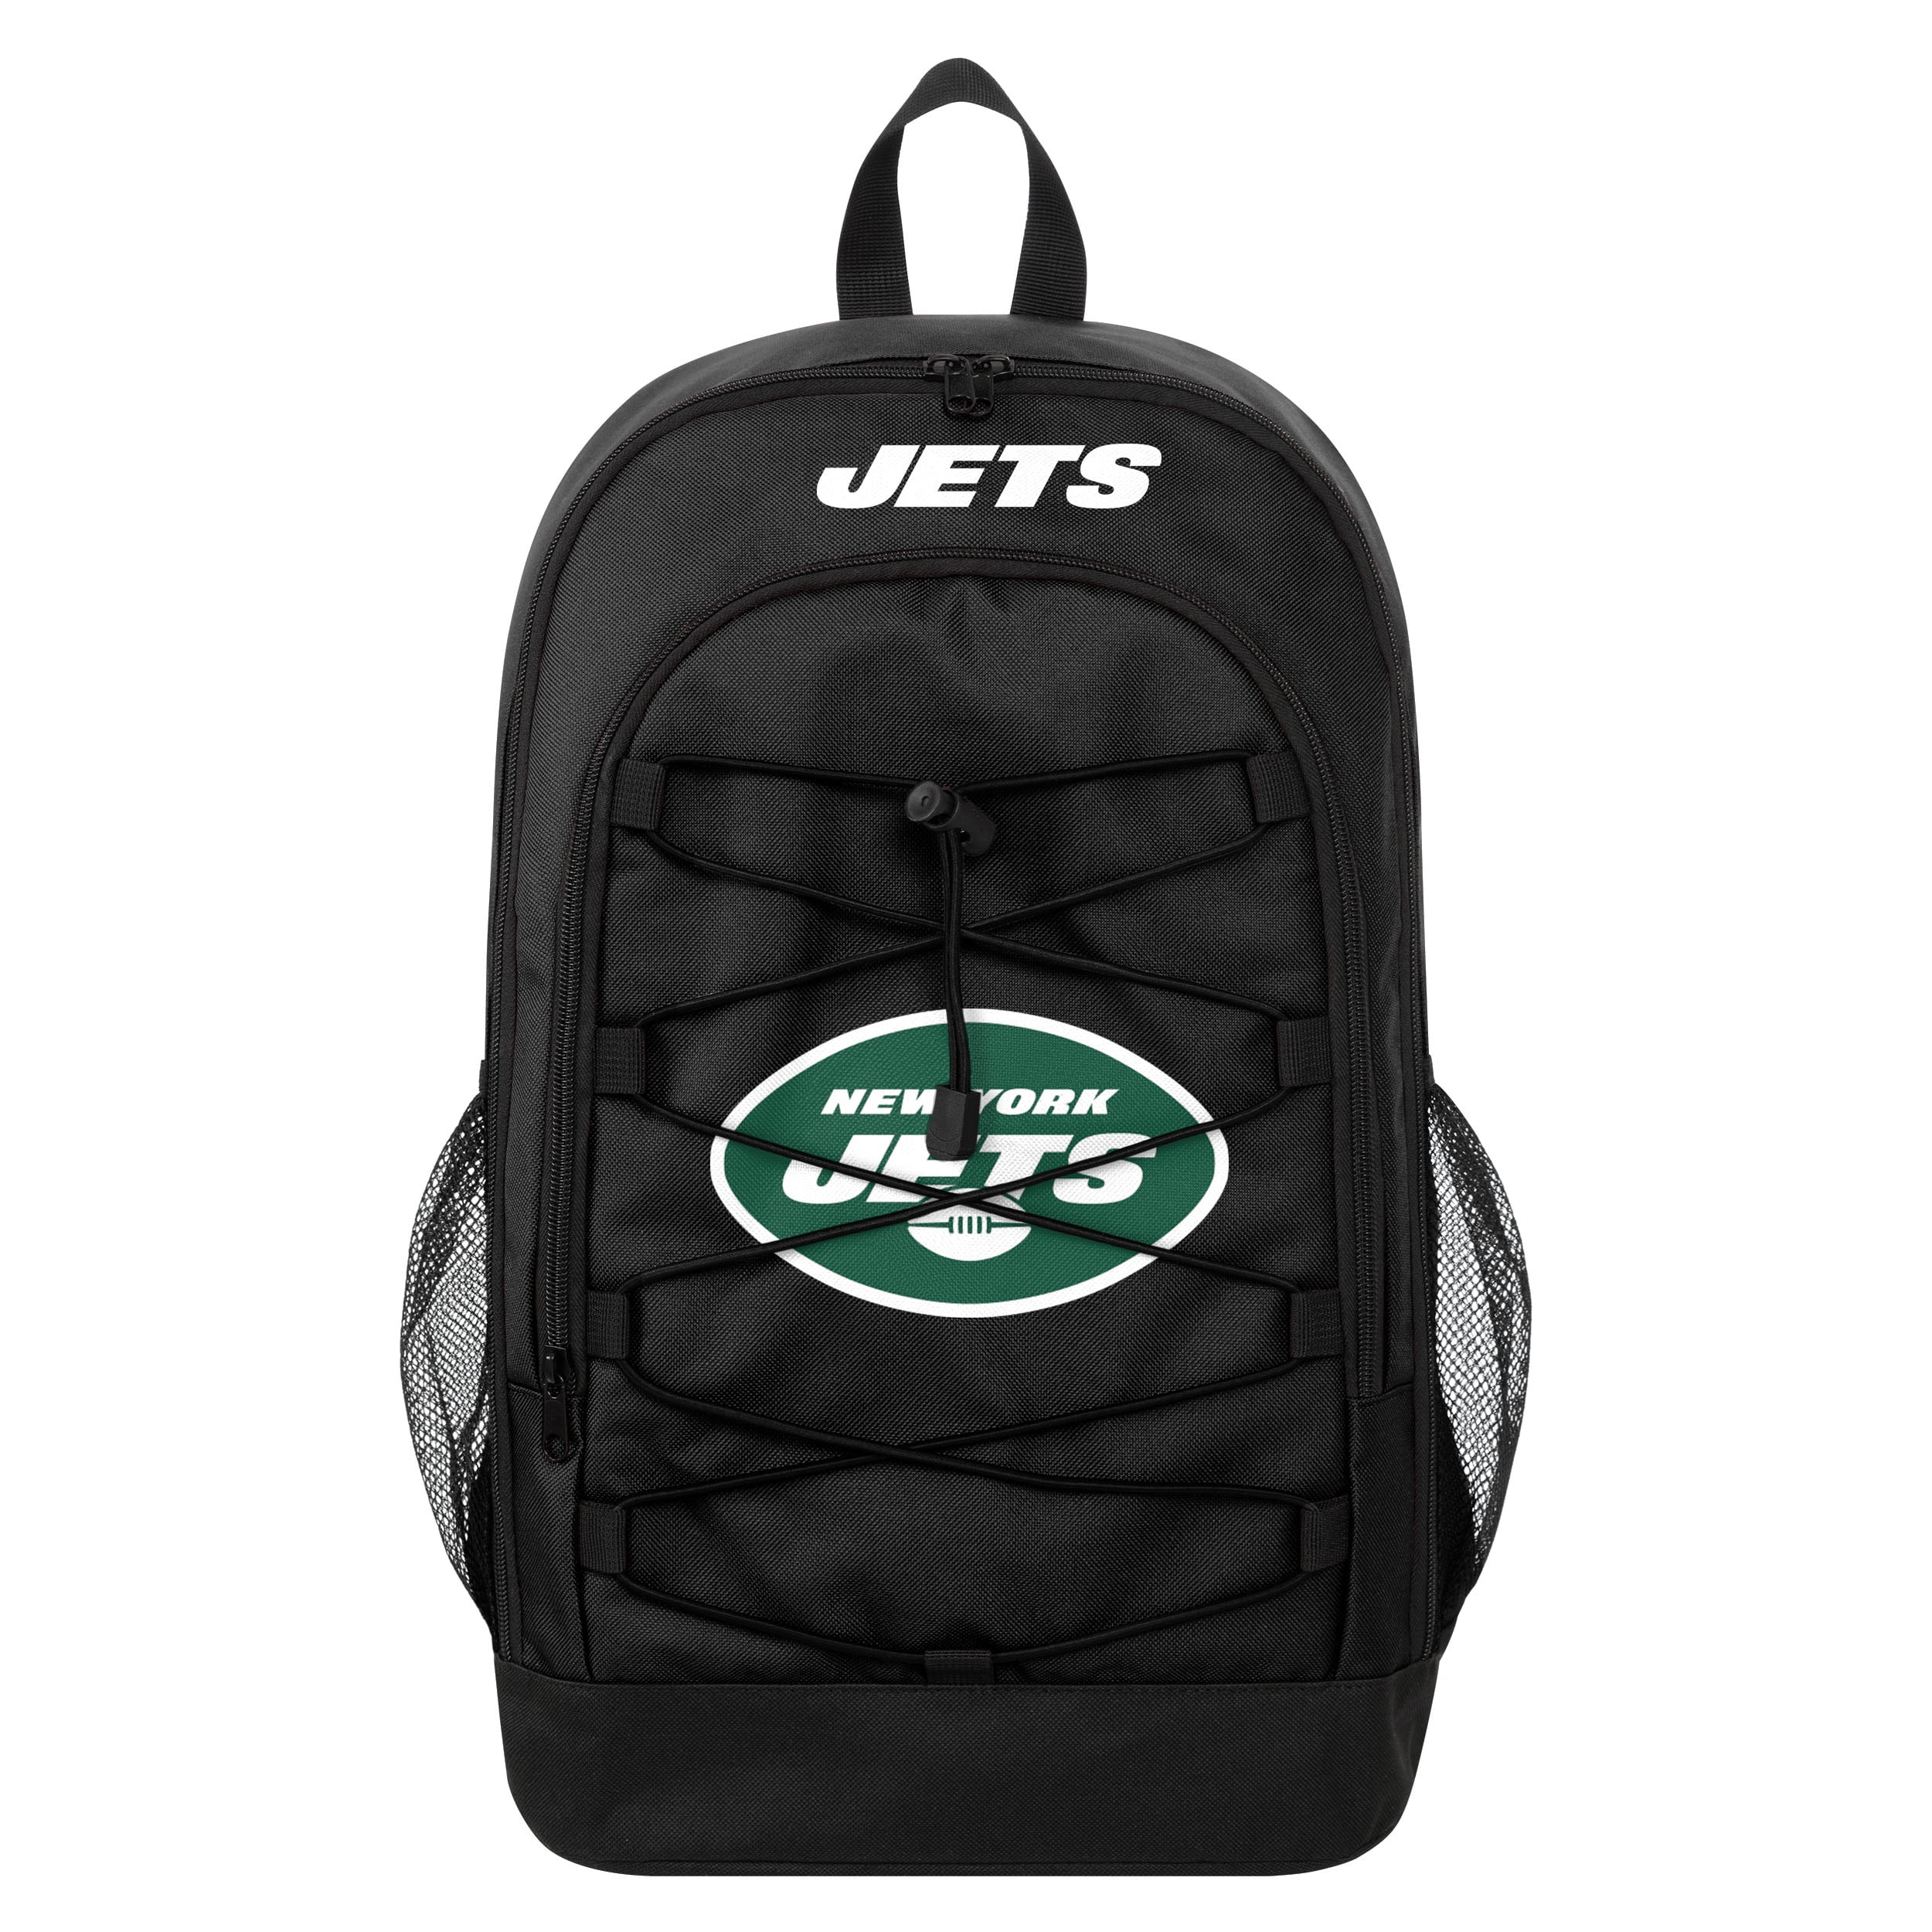 New York NY Jets Logo Action BackPack School Bag new Back pack Gym Travel Book 